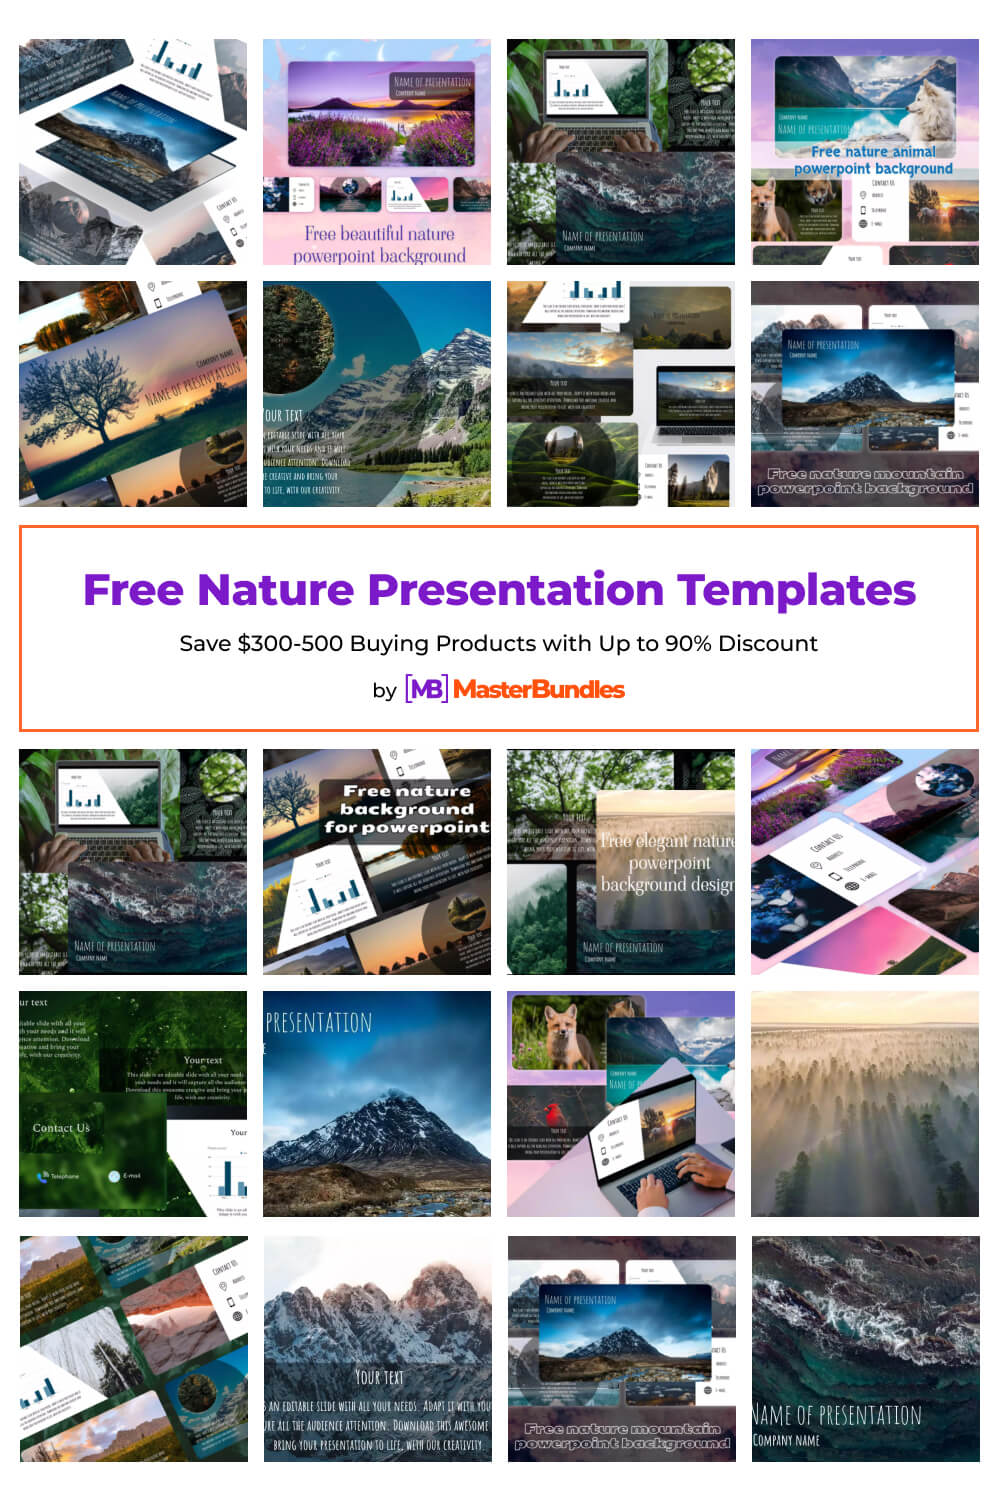 free nature presentation templates pinterest image.